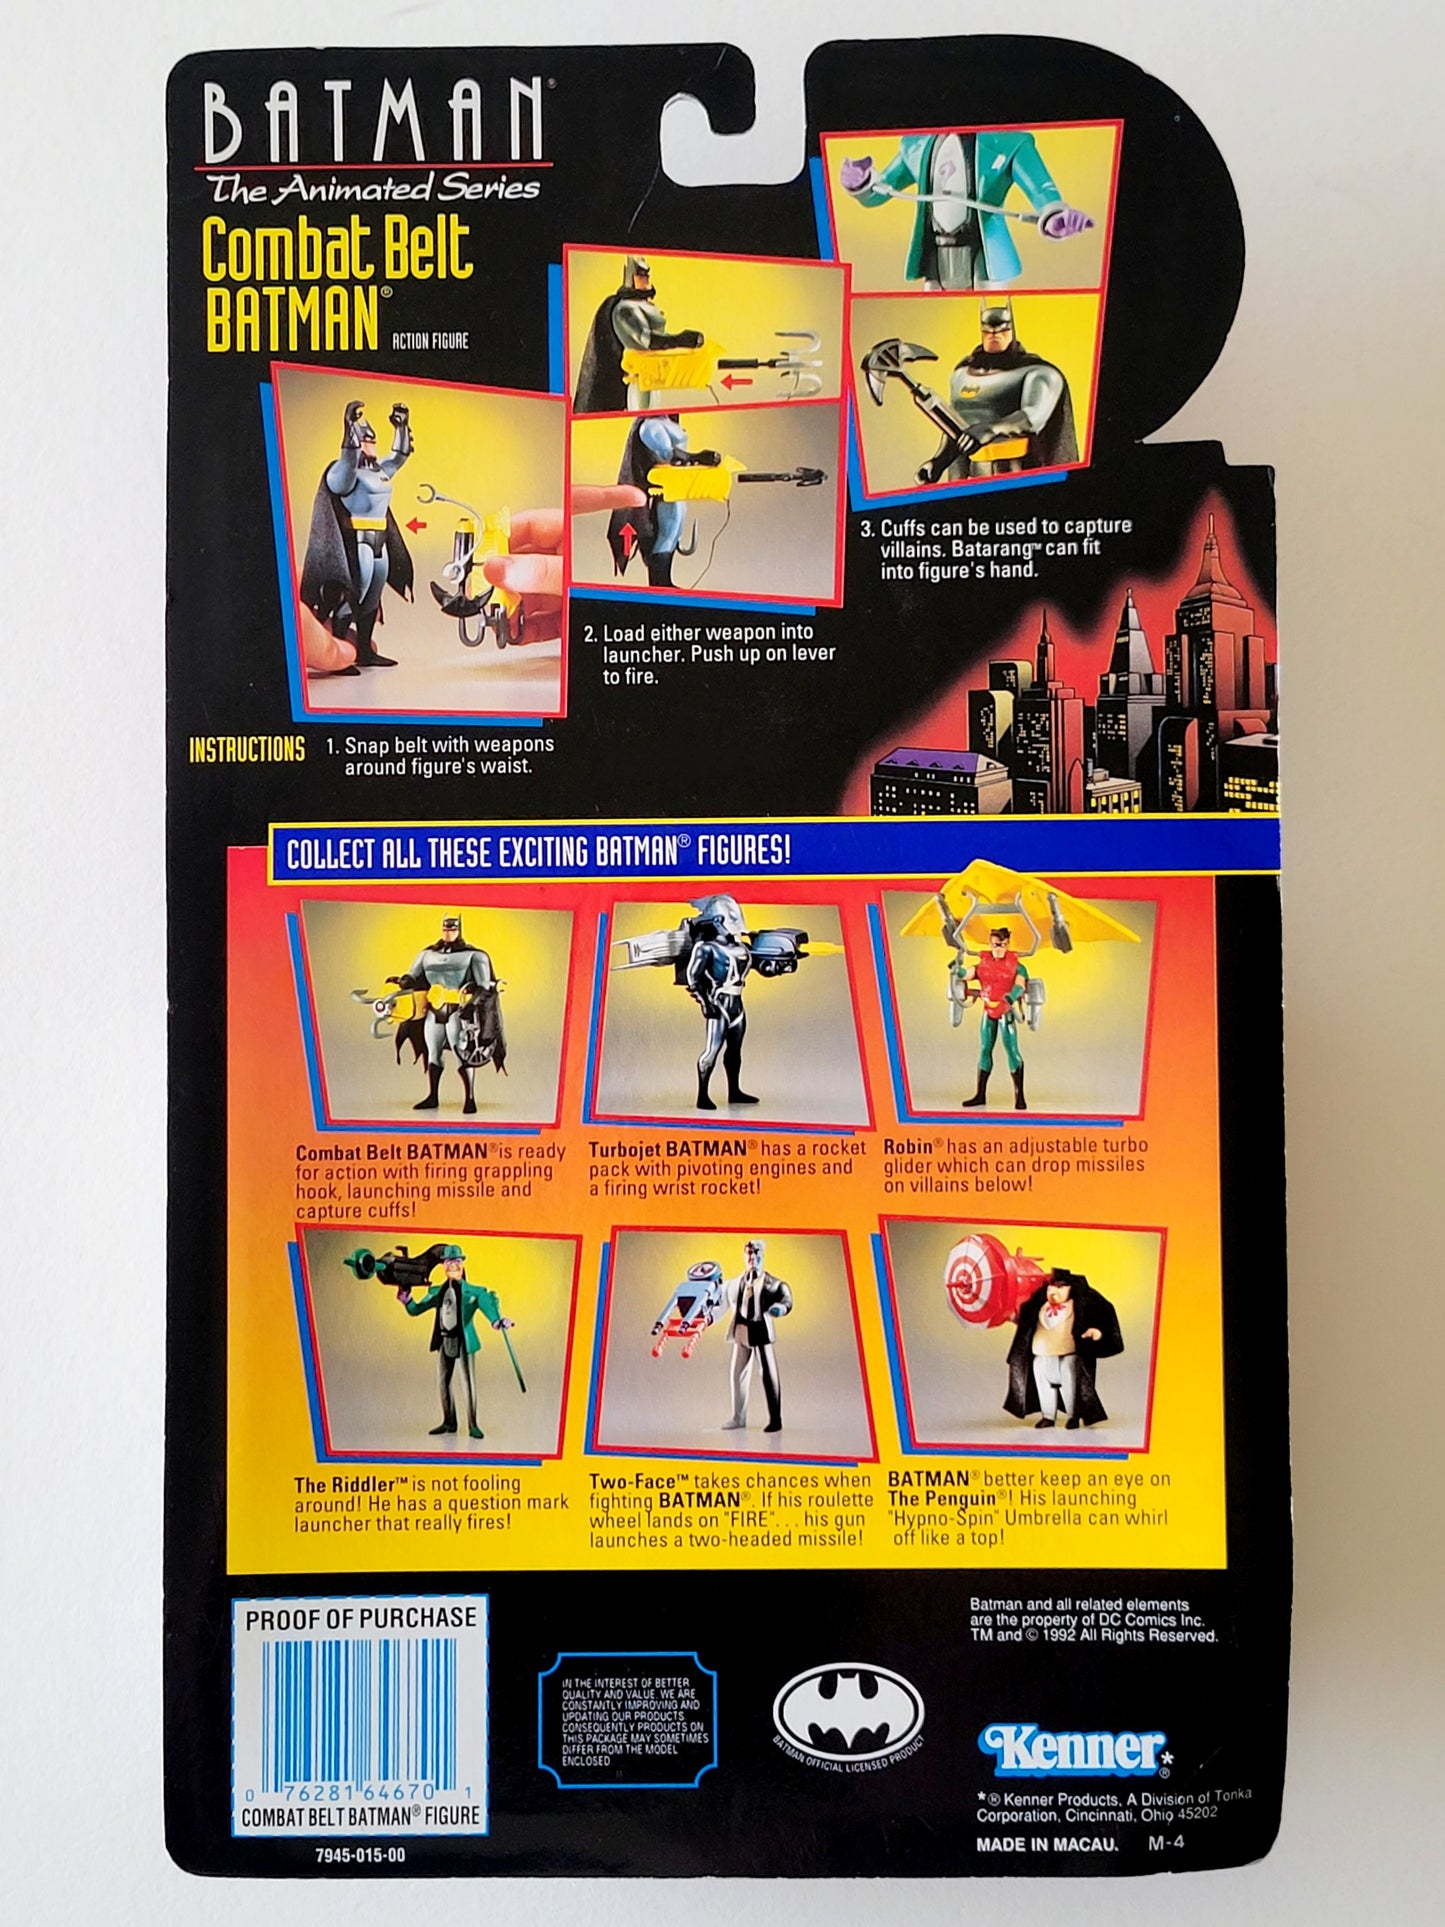 Combat Belt Batman Action Figure from Batman: The Animated Series